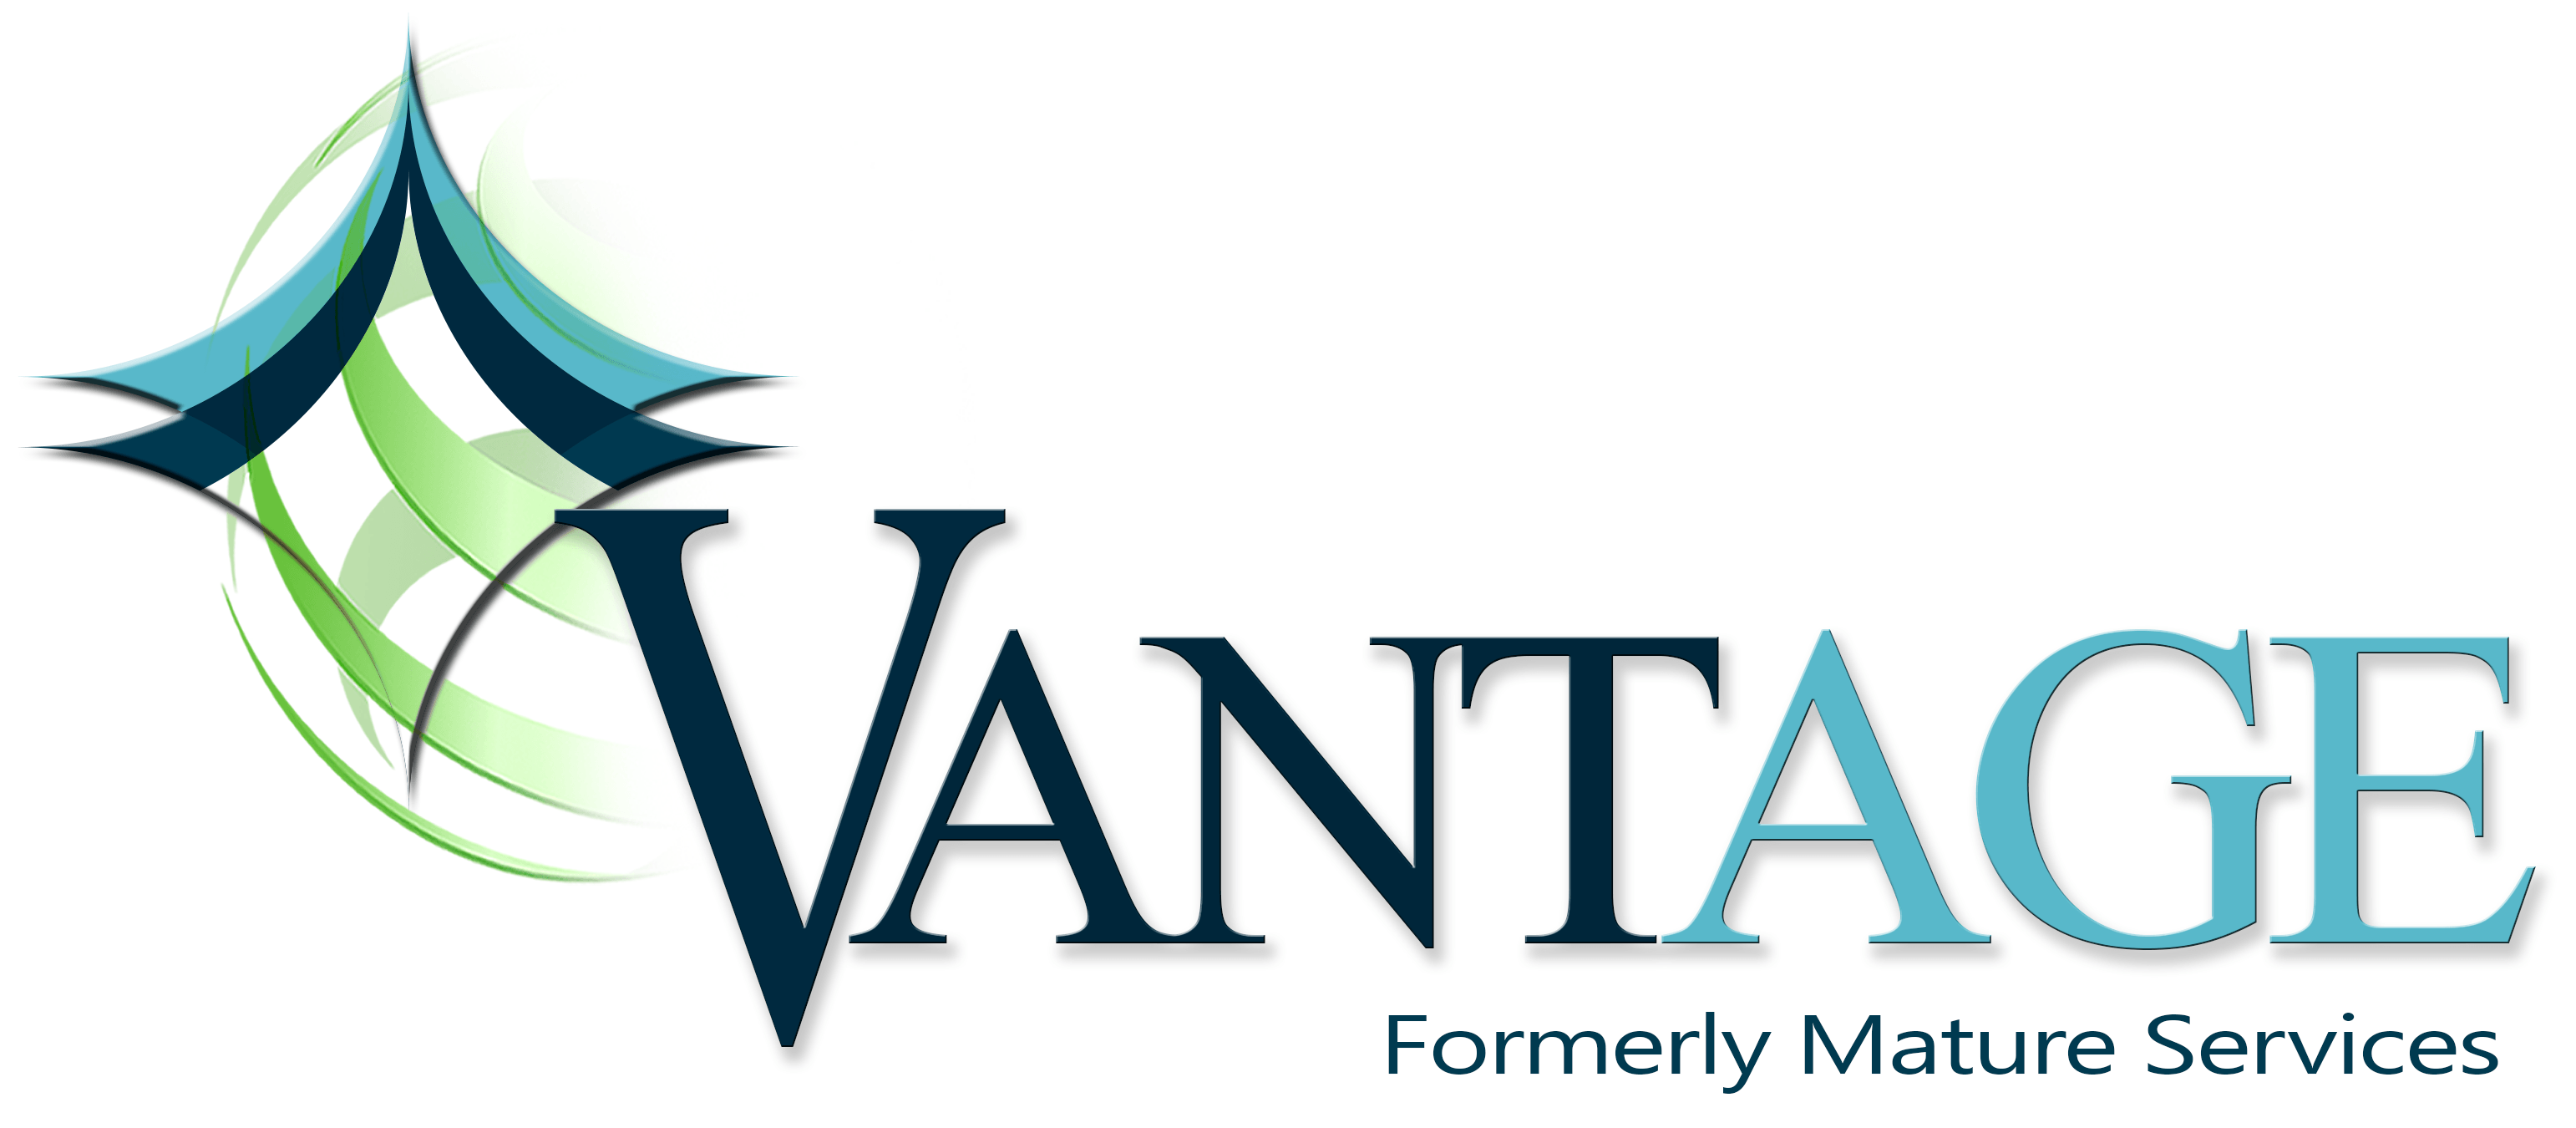 Vantage Logo - Vantage-Master-Logo-Formerly-Mature-Services-11-21-2017 ...